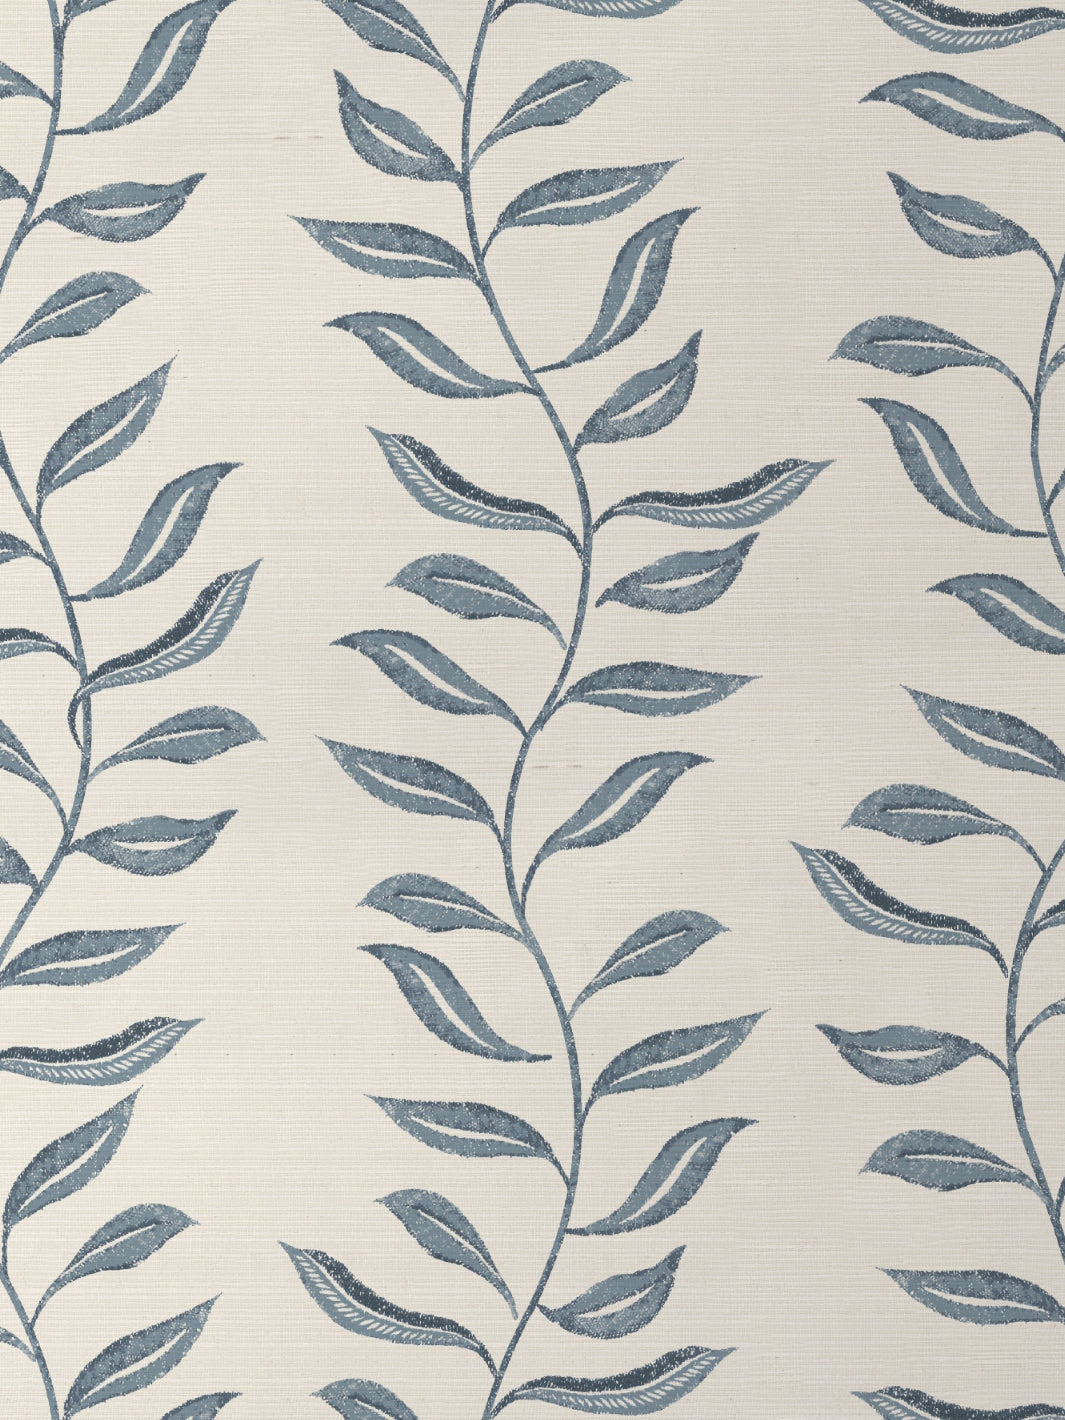 'Seneca' Grasscloth Wallpaper by Nathan Turner - Blue